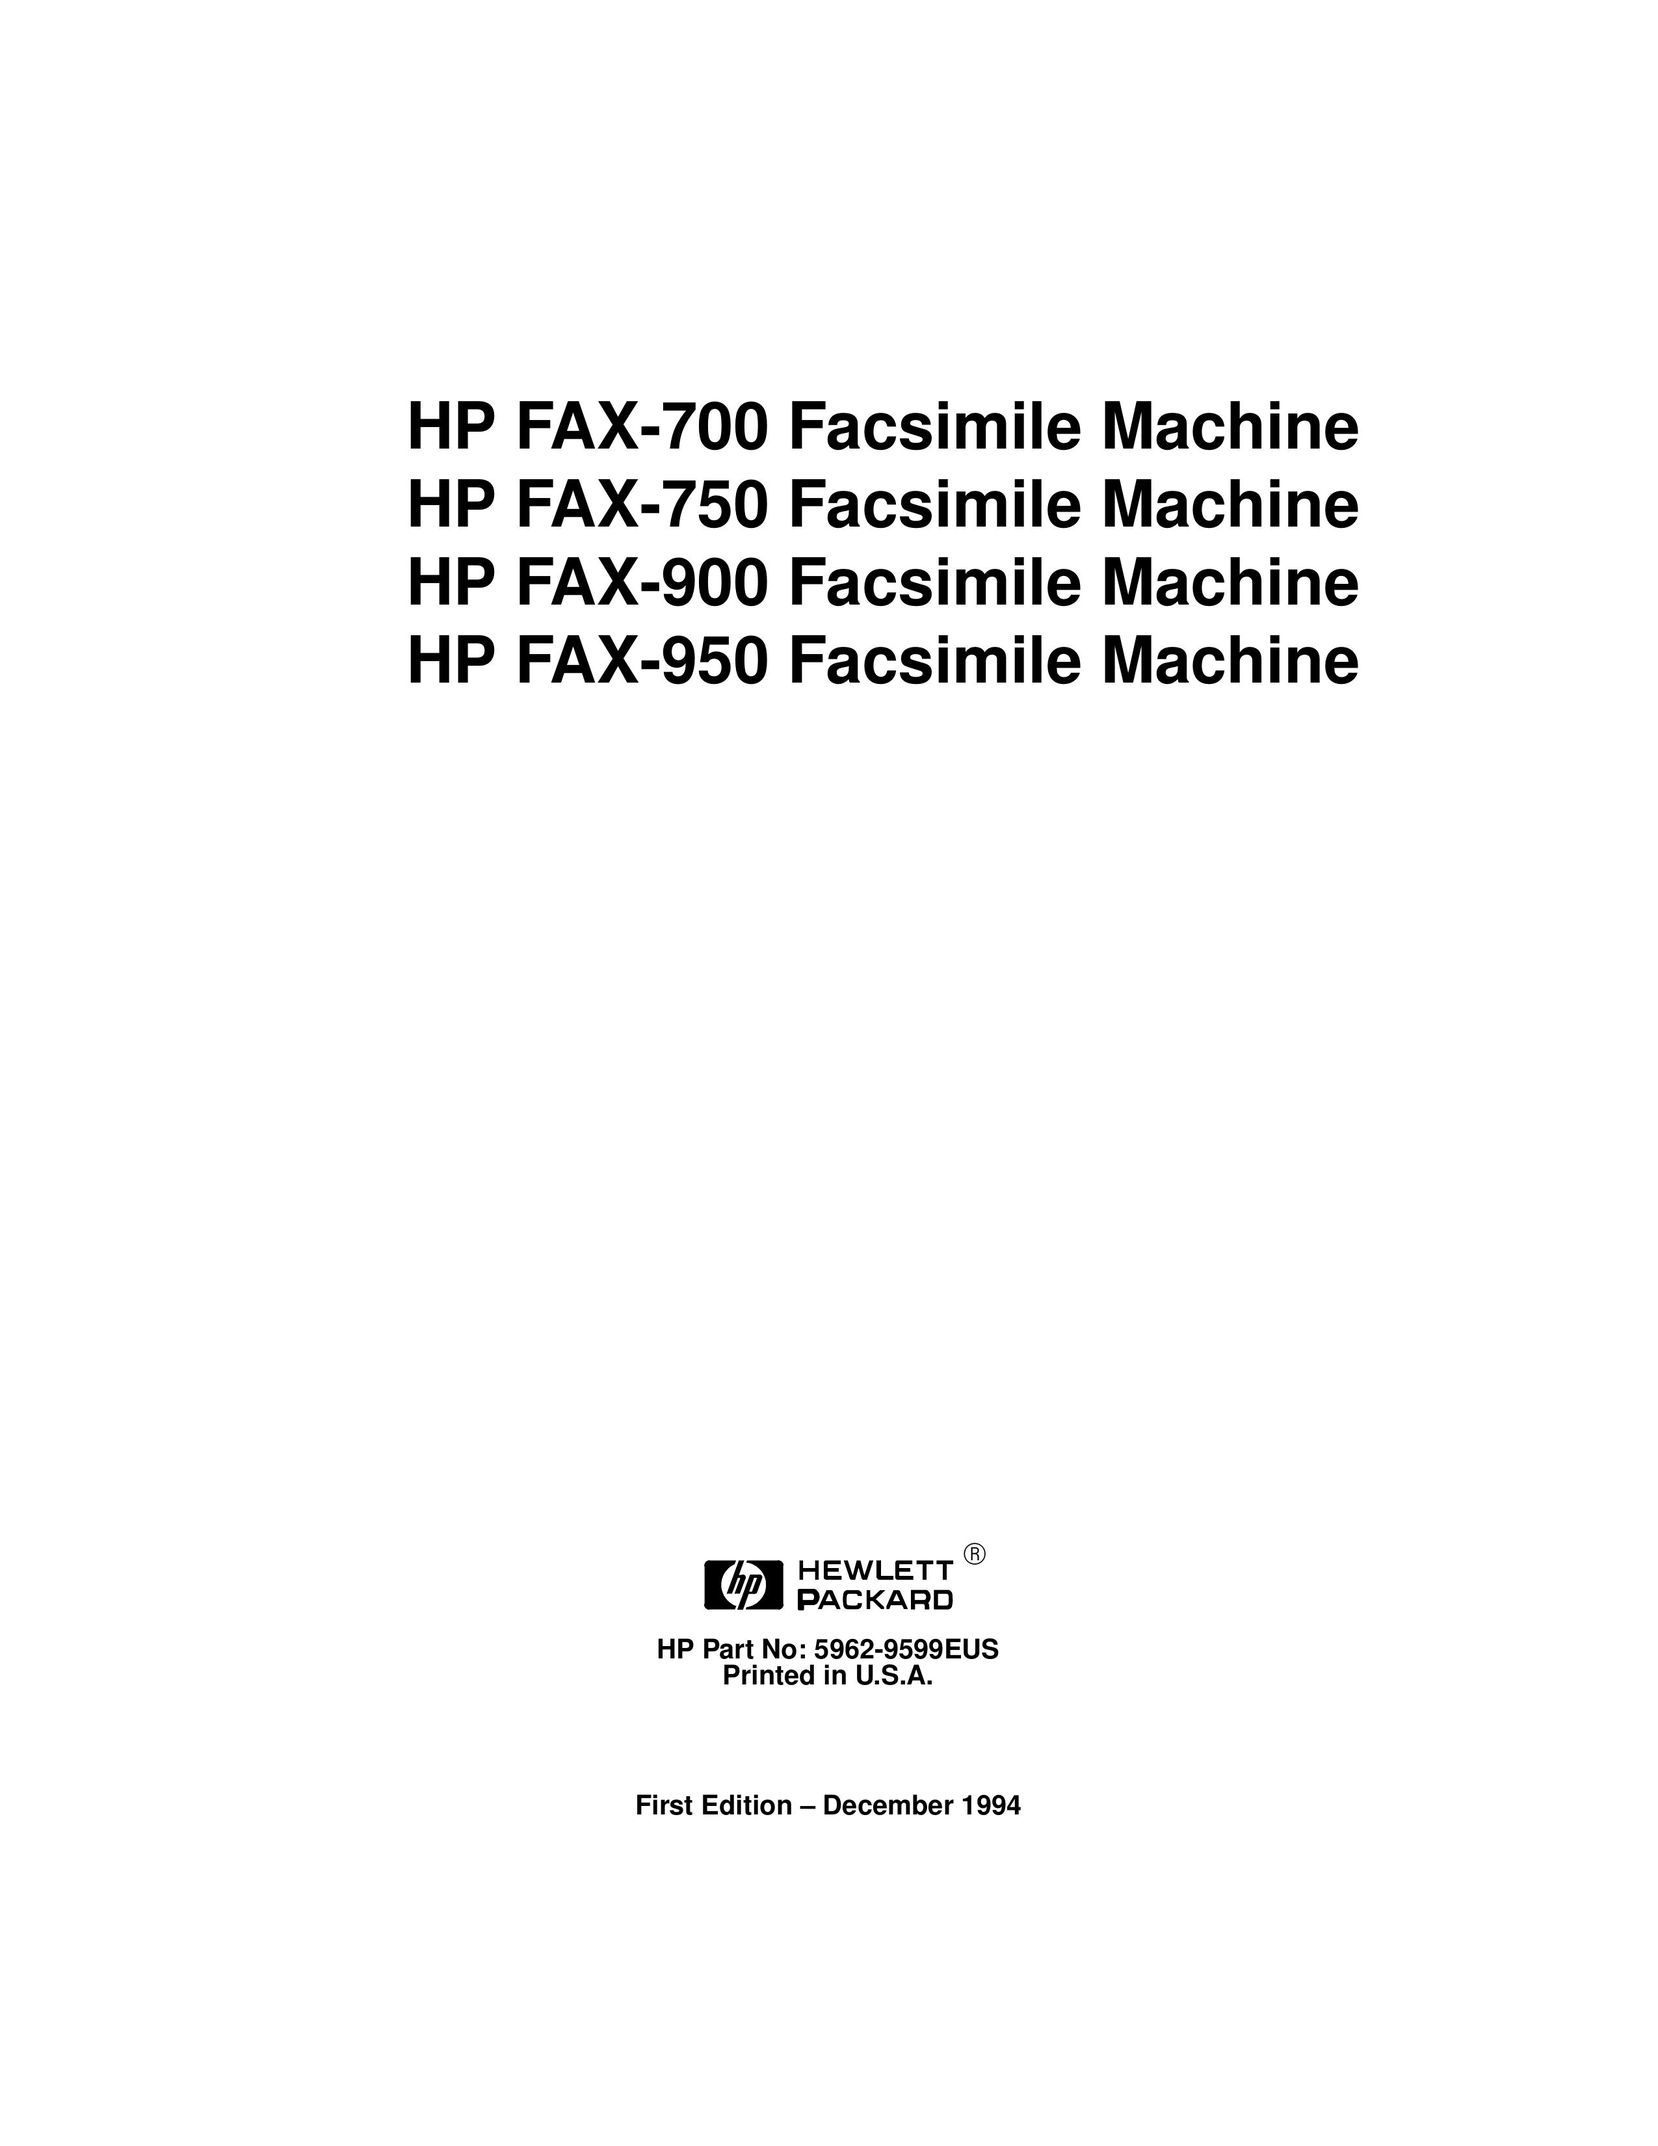 HP (Hewlett-Packard) HP FAX-950 Fax Machine User Manual